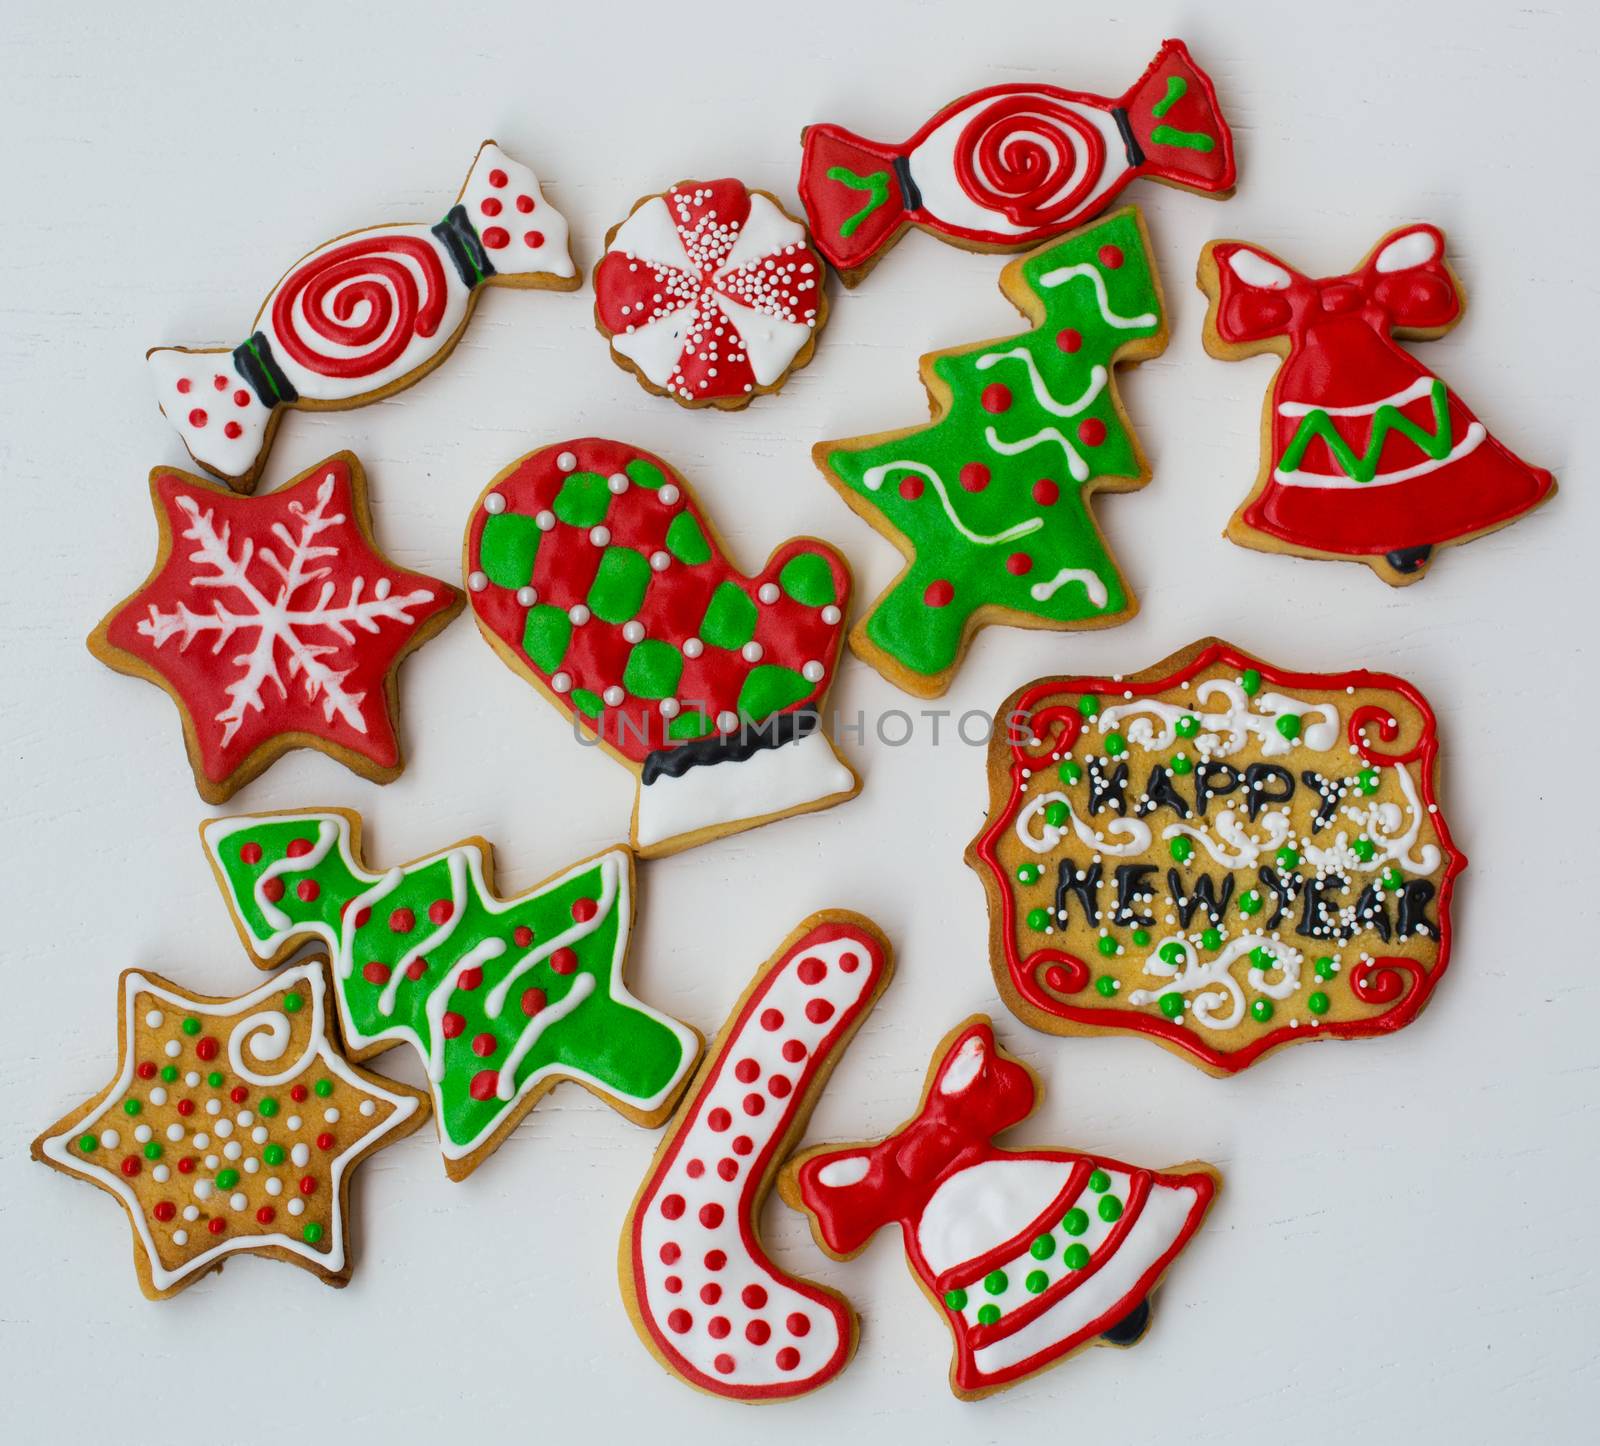 shaped, colorful Christmas cookies by yebeka